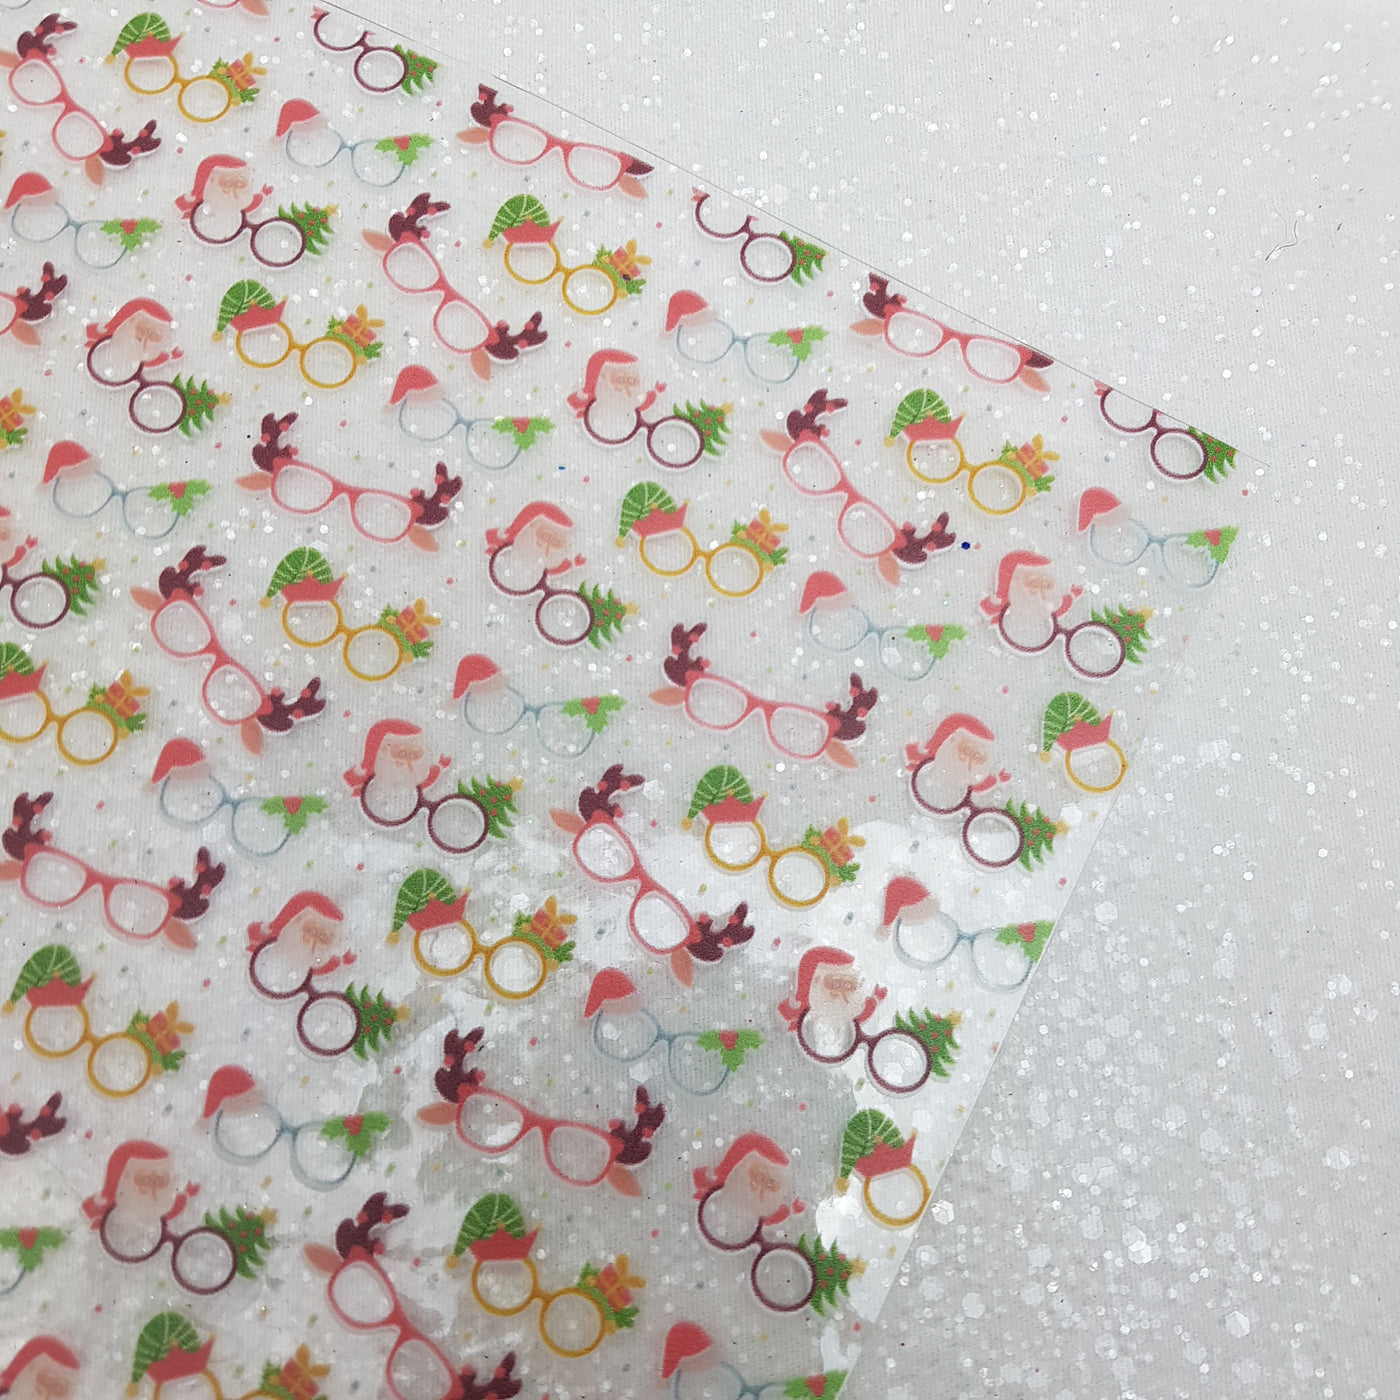 Cute Christmas glasses - Clear transparent vinyl sheets